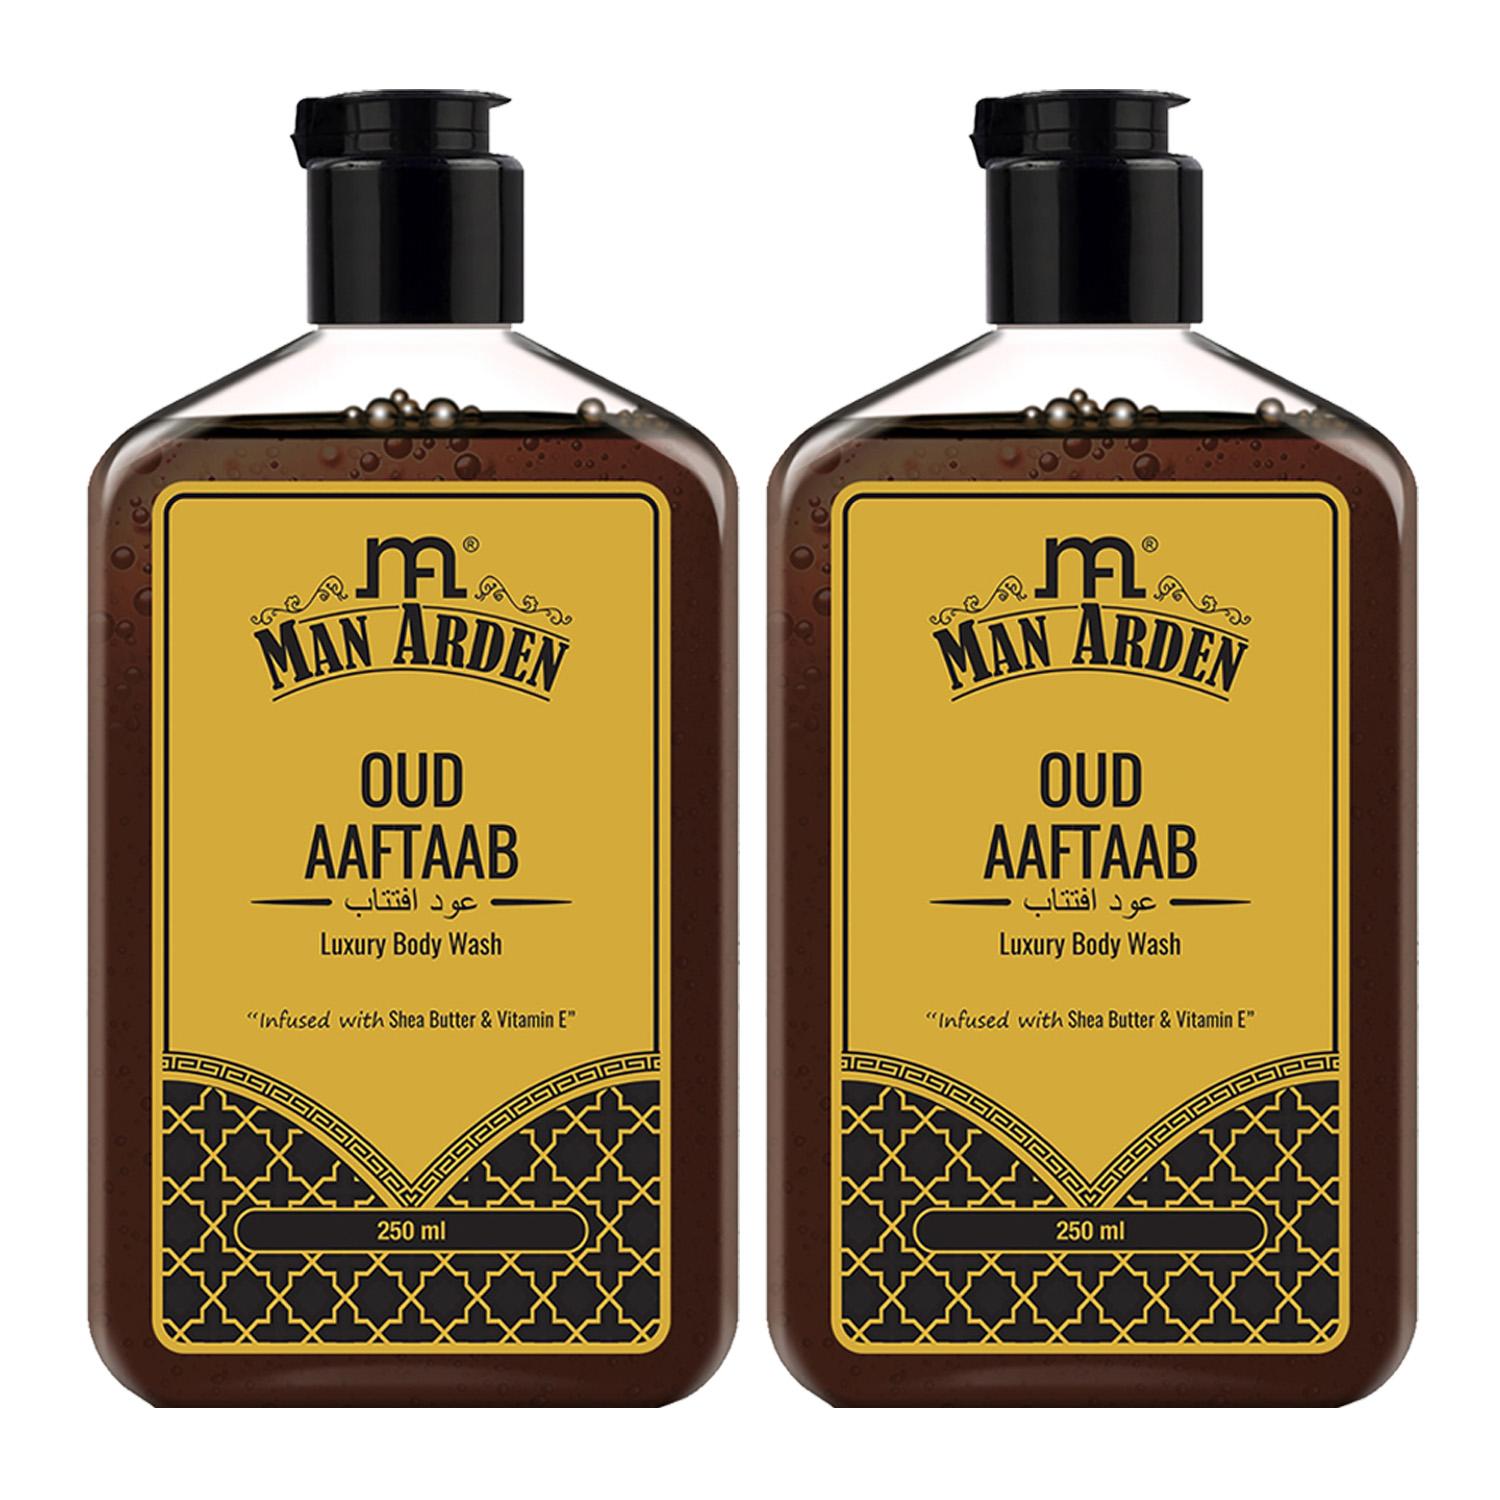 Man Arden Luxury Body Wash Oud Aaftaab (250 ml) (Pack of 2)